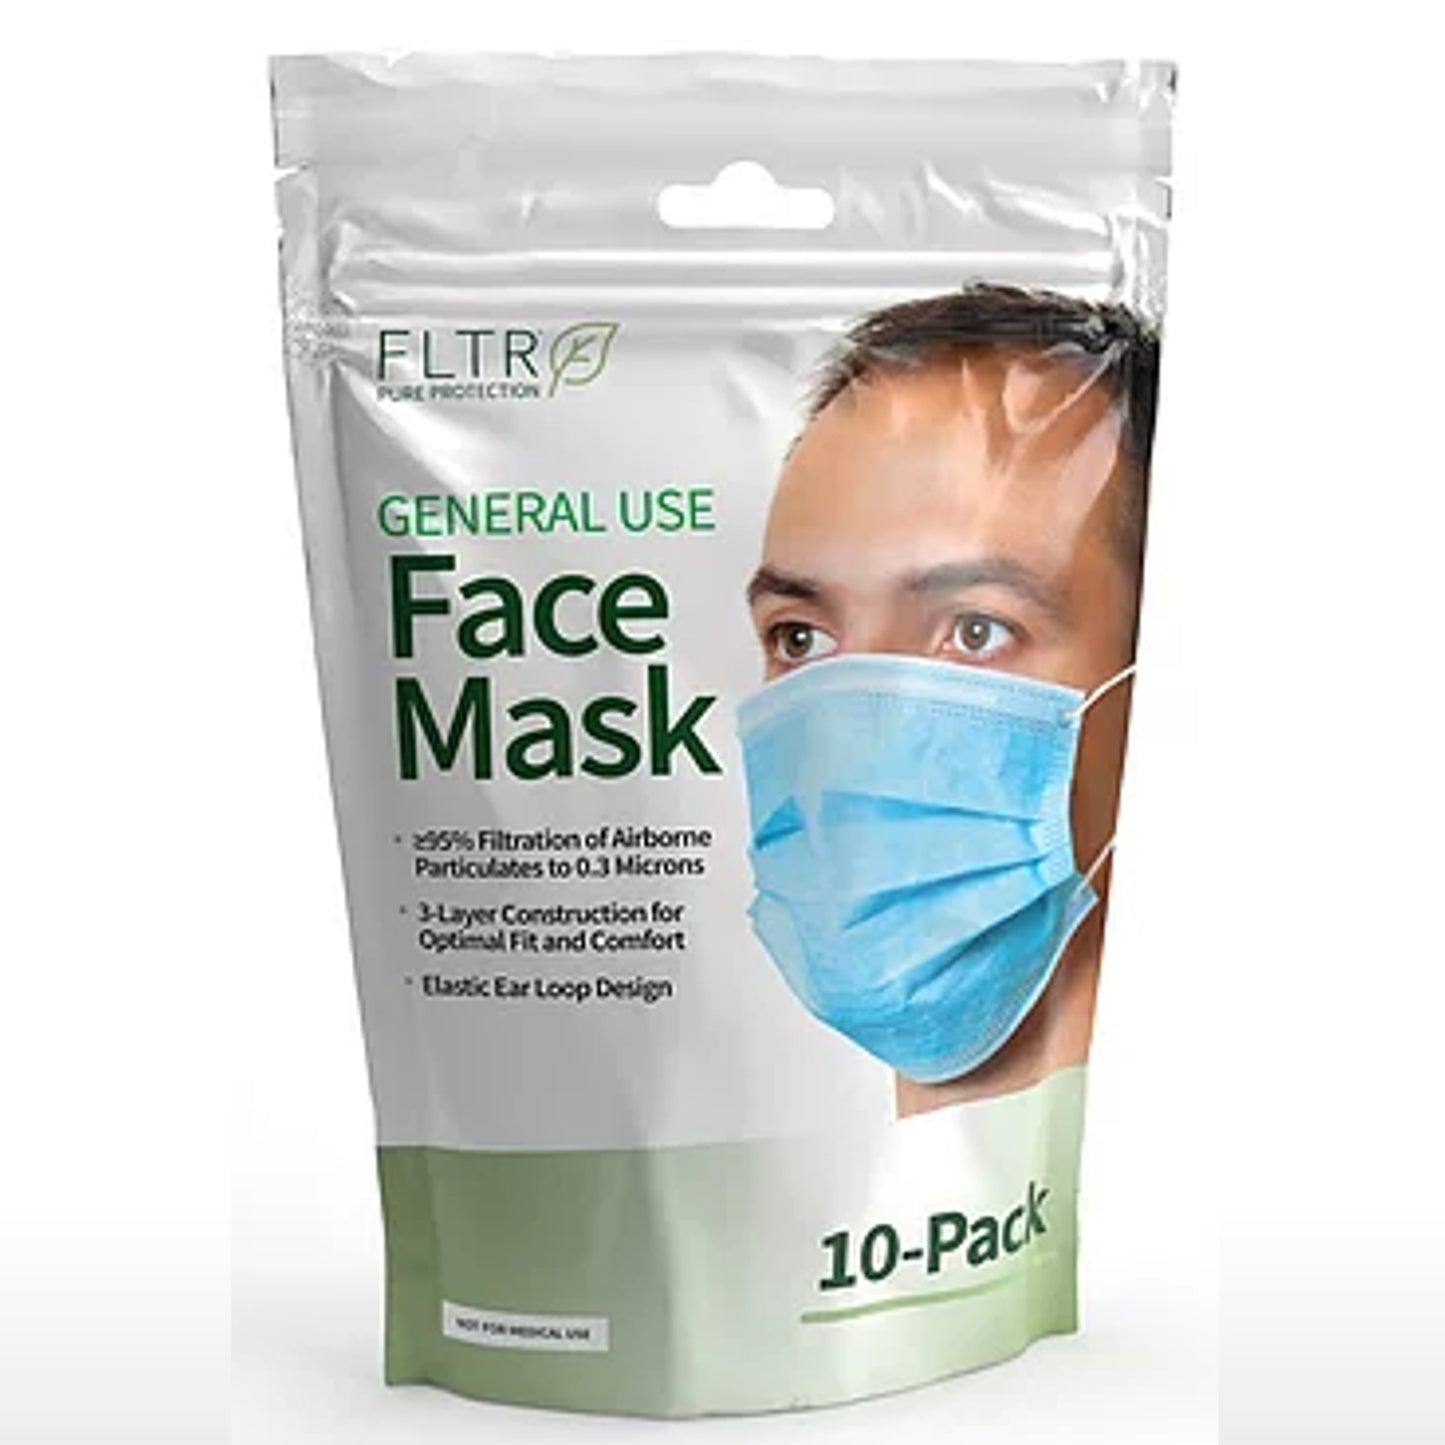 FLTR Face Mask Sized for Adults 3-layer 95% Filtration Black 1 Bag - 10 Pack